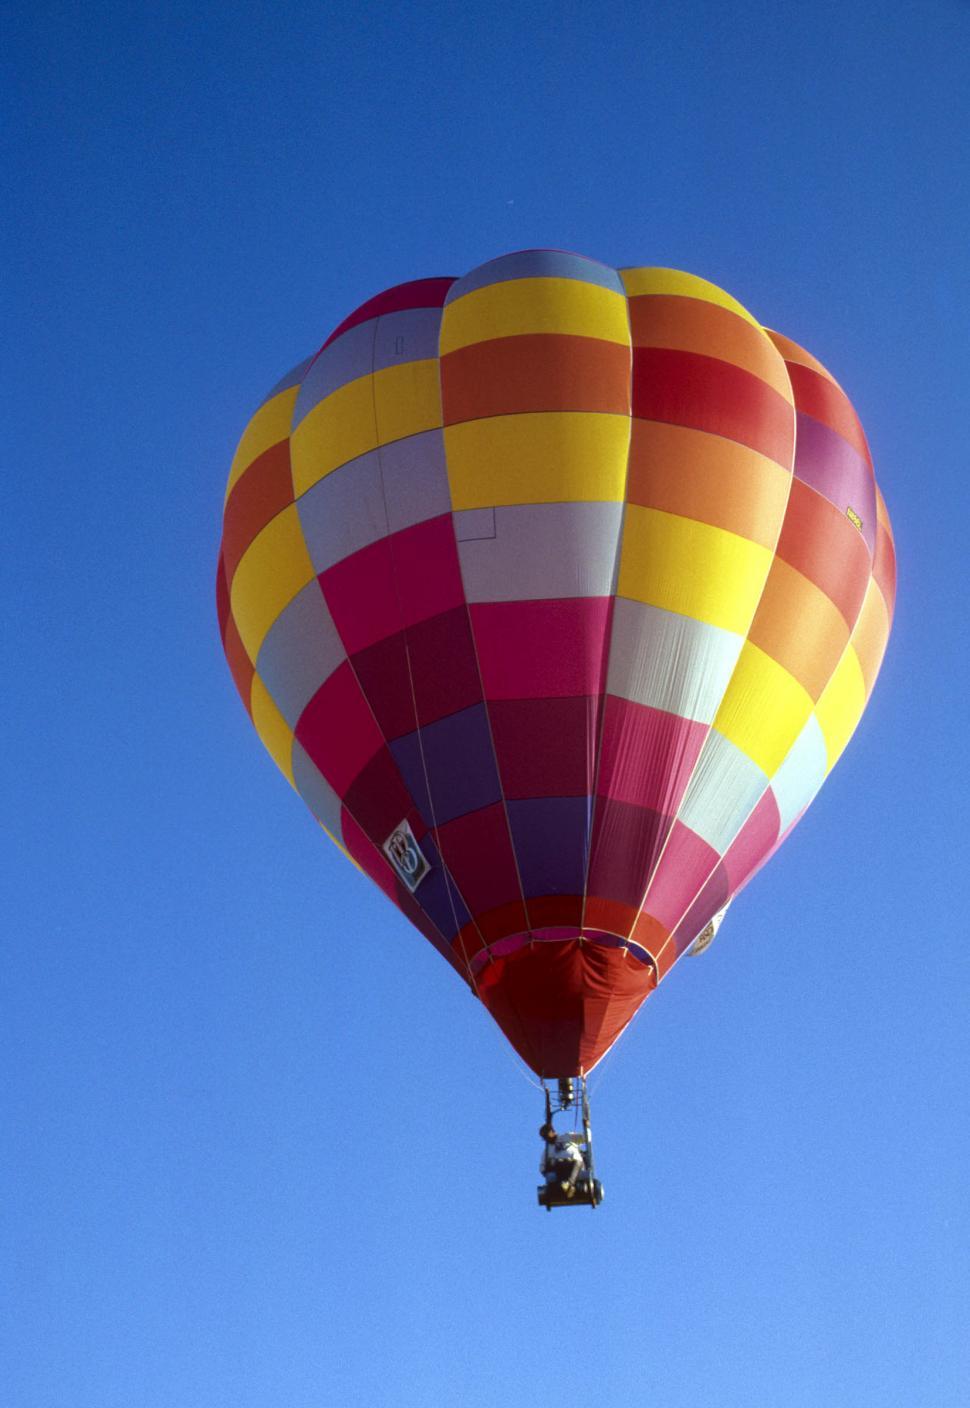 Free Image of balloon in flight 